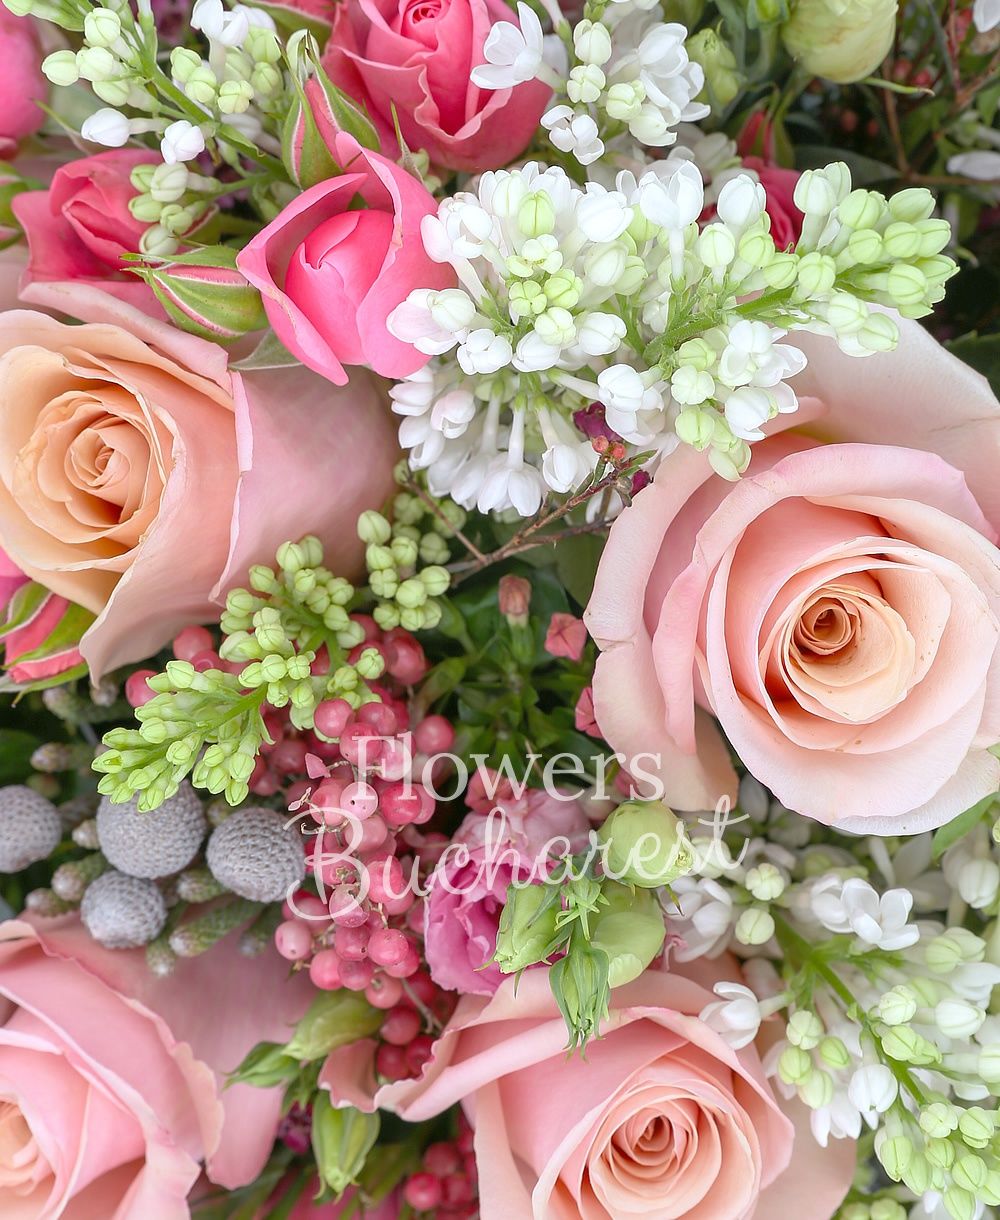 10 pink roses, 5 pink miniroses, 5 pink bouvardia, 5 brunia, 7 white lilac, 5 waxflower, greenery